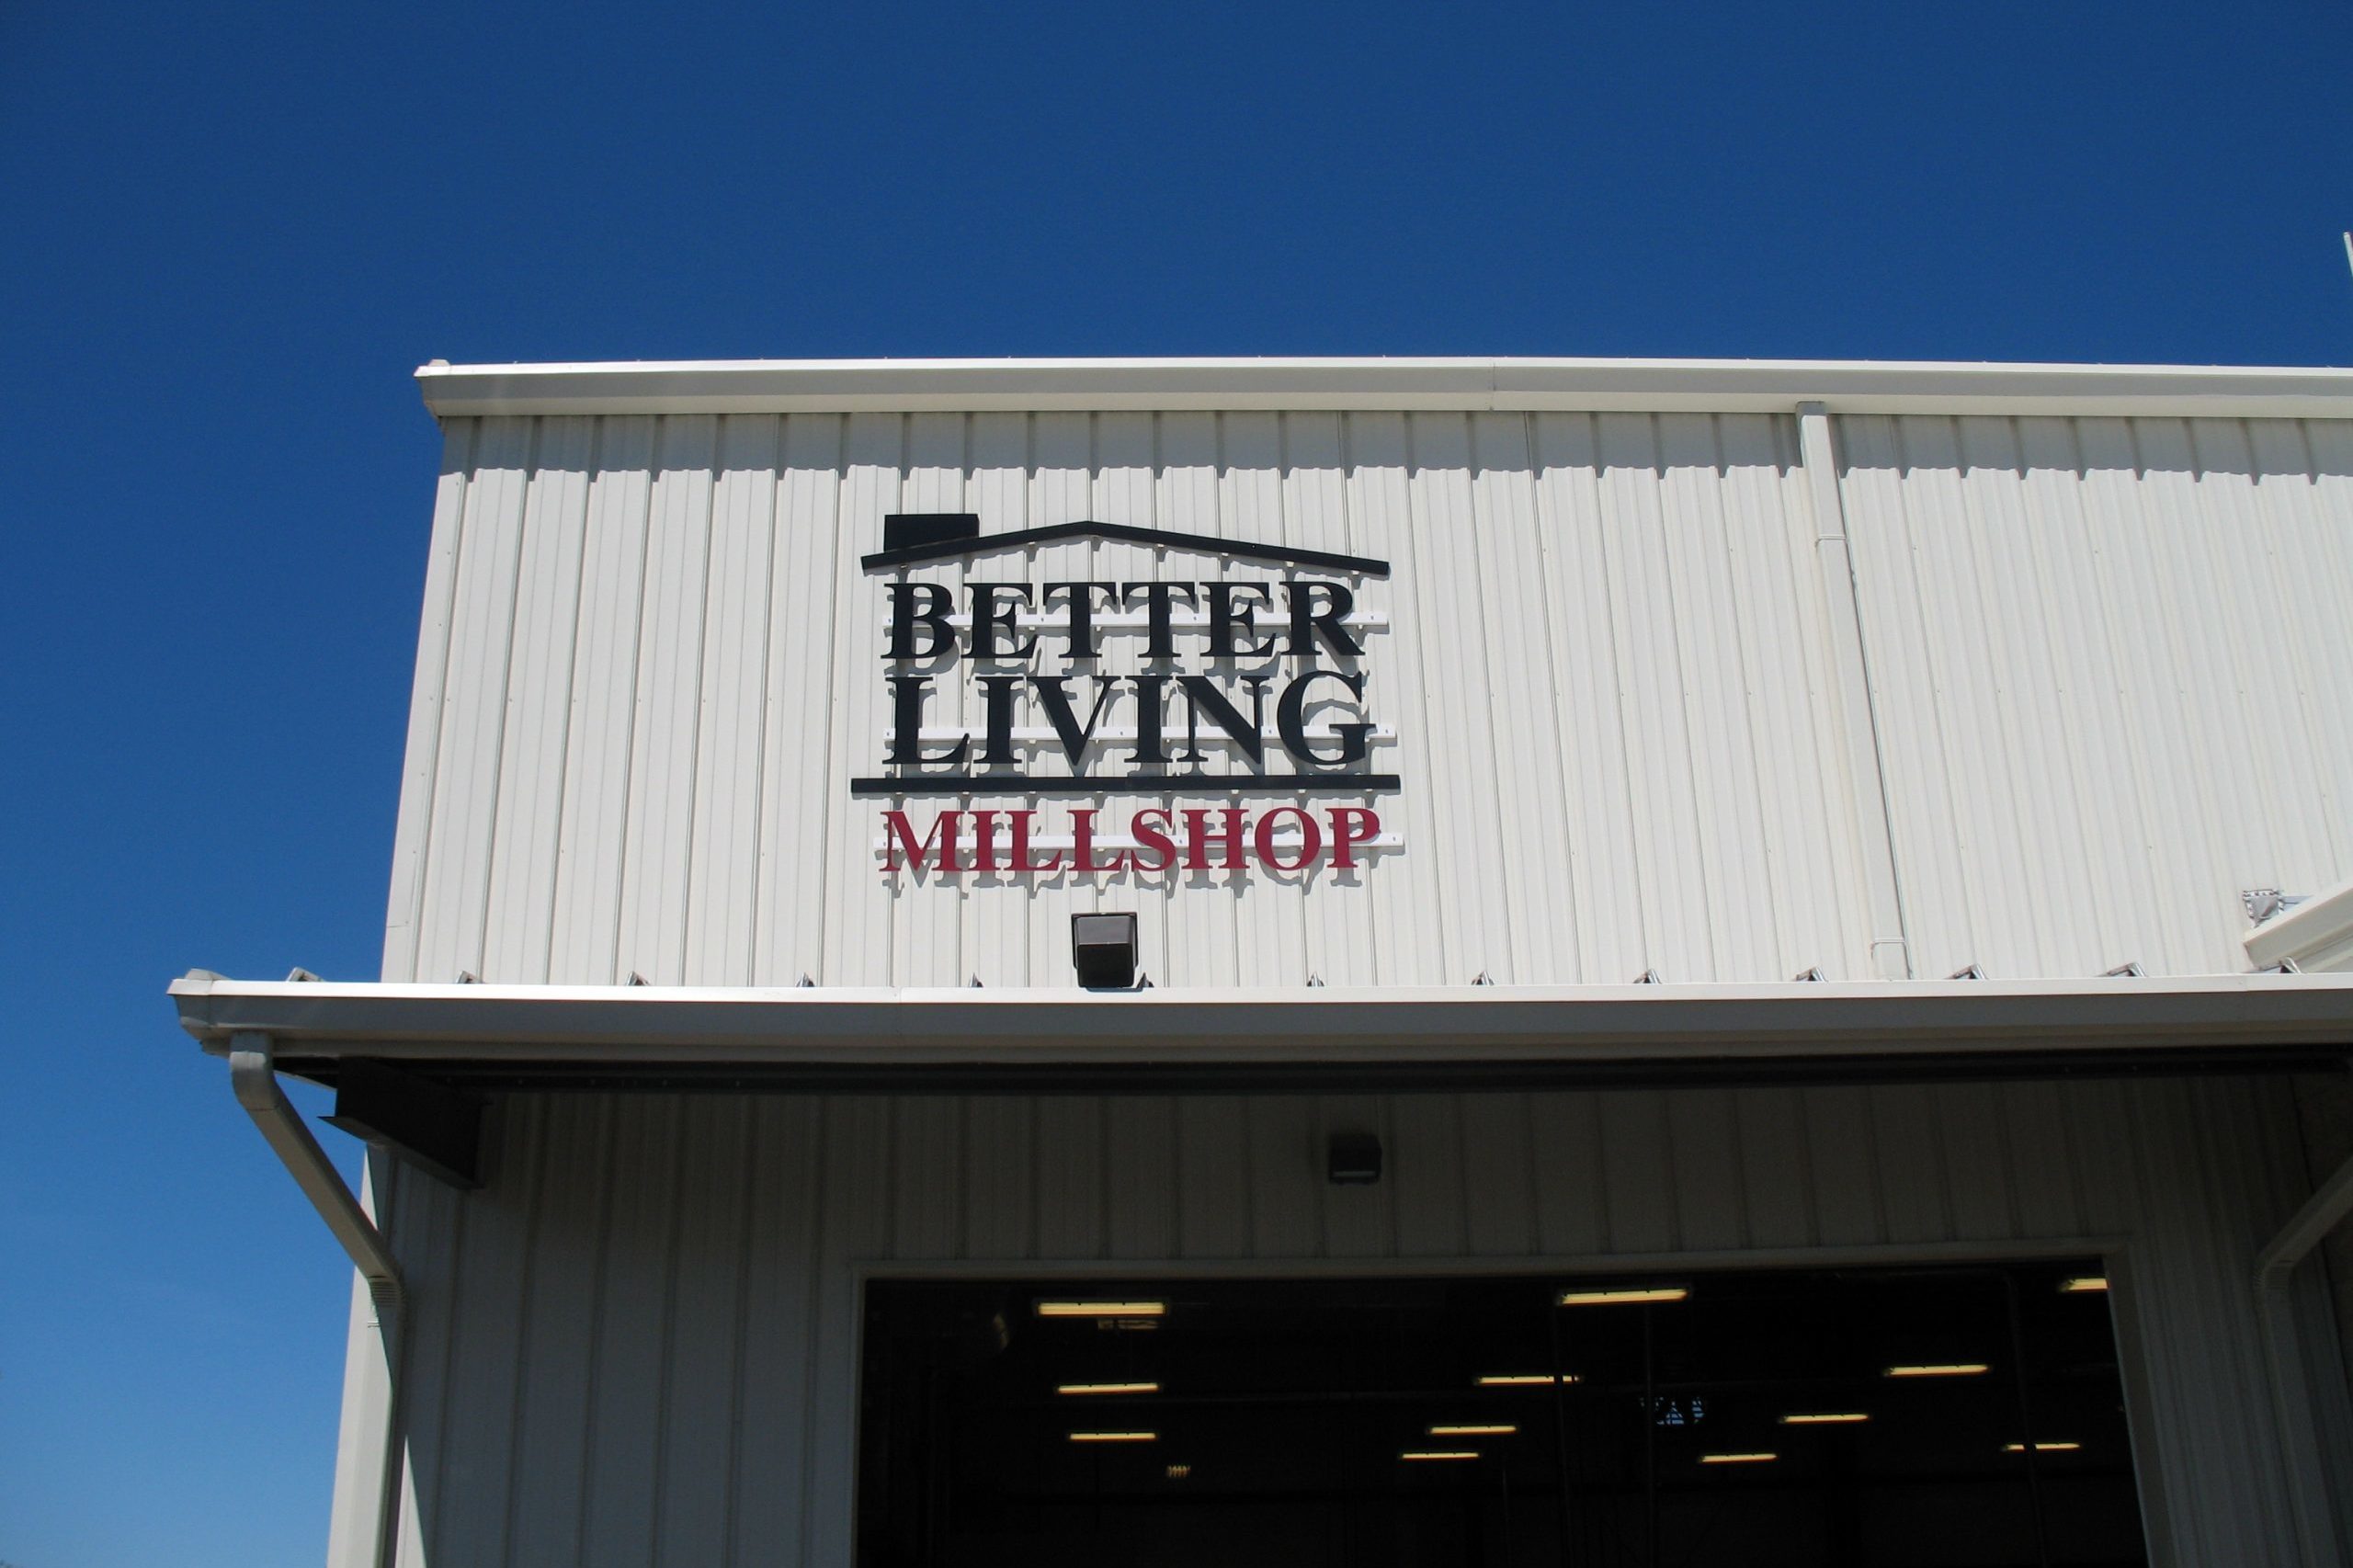 Better Living Mill Shop exterior sign